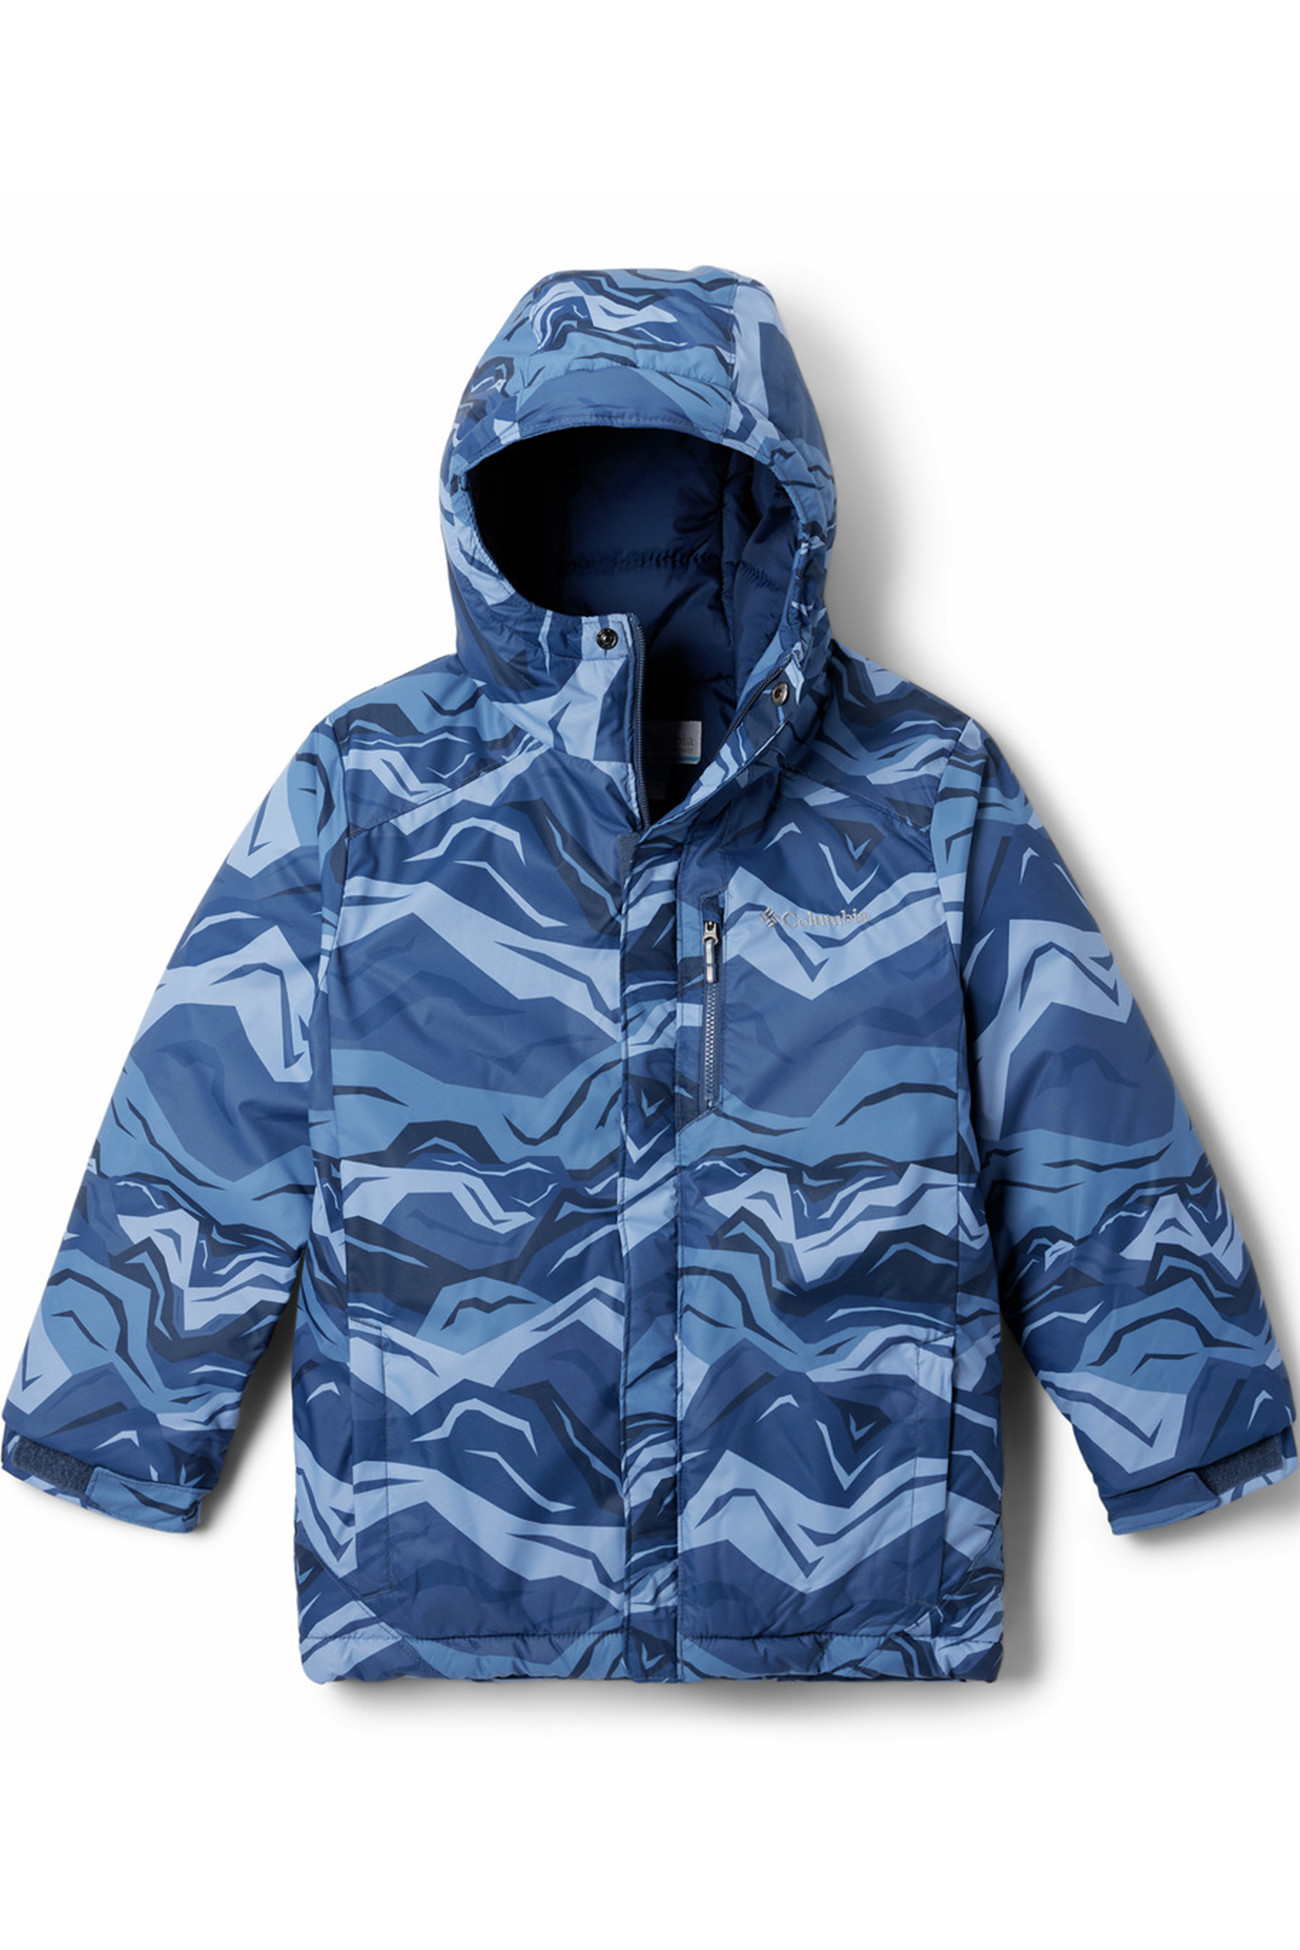 Куртка детская Columbia Alpine Free Fall™ II Jacket синяя 1863451-468 изображение 2